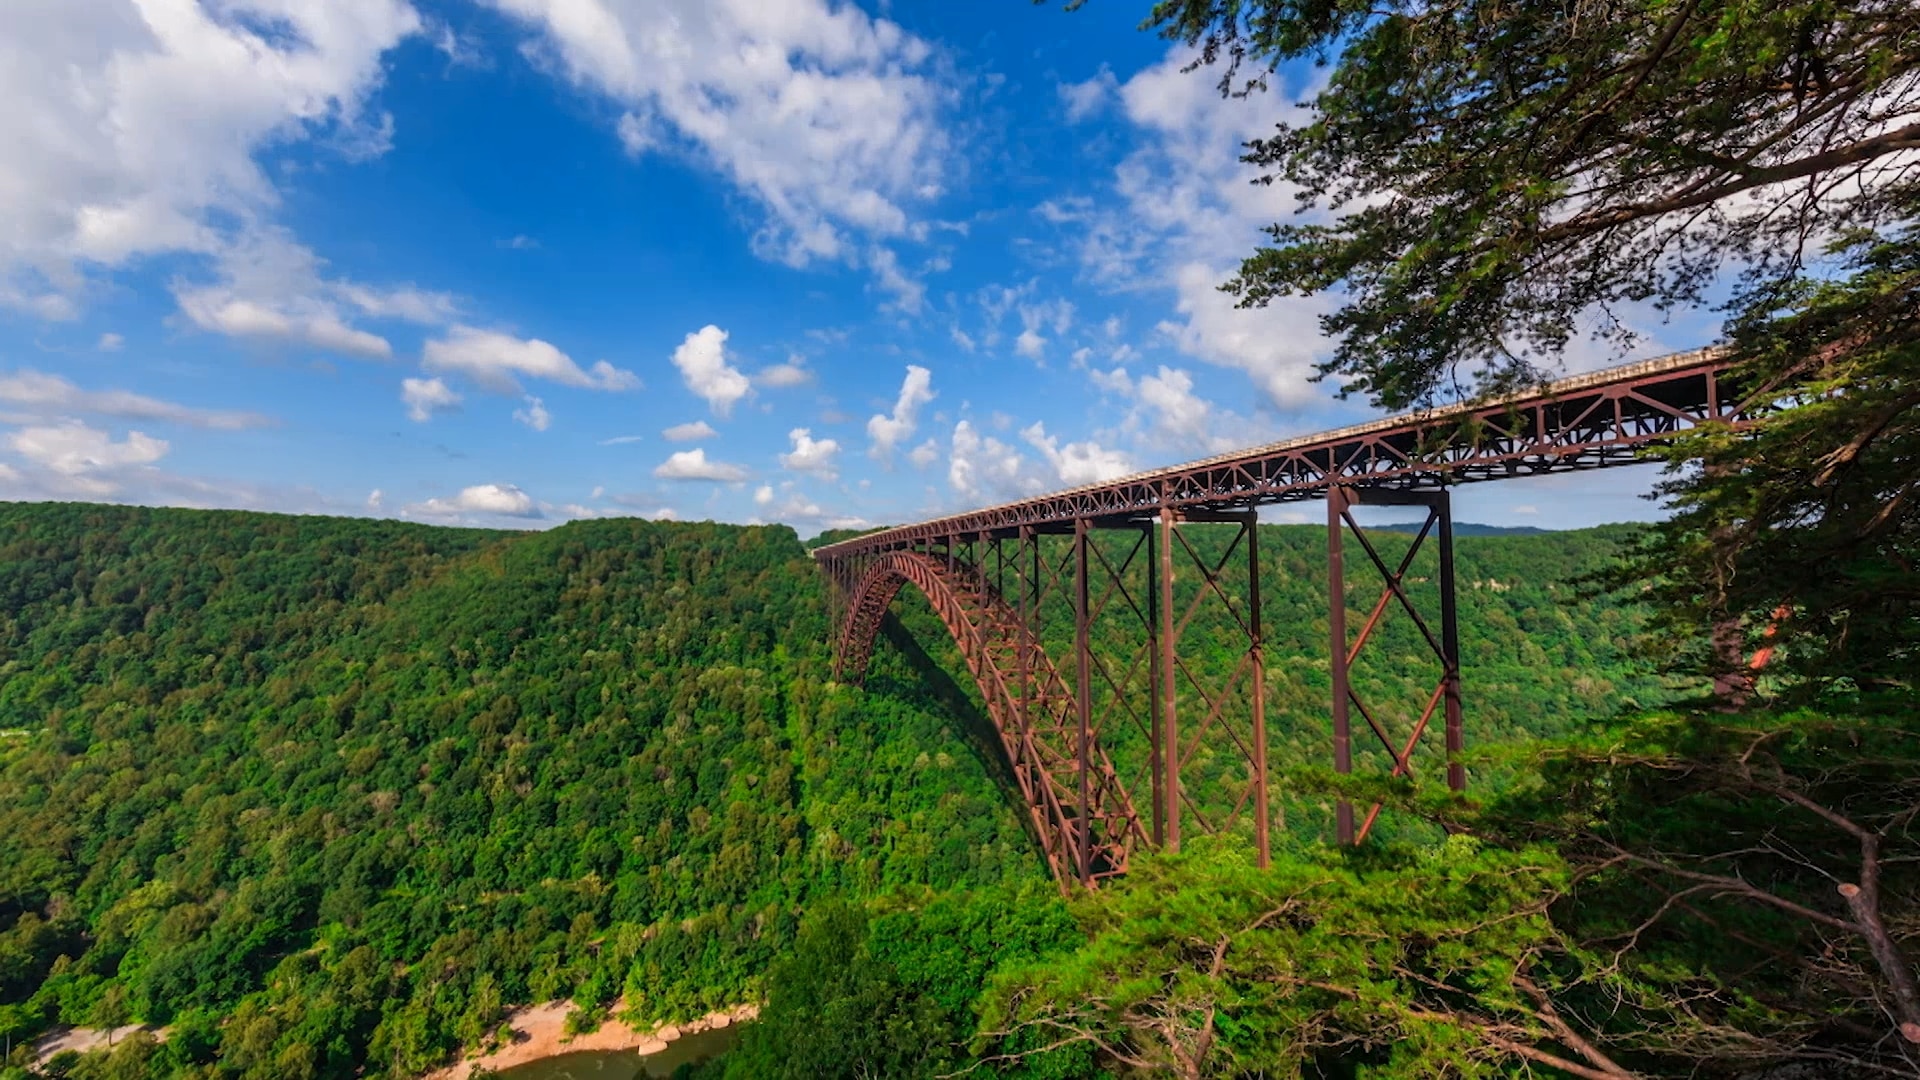 New River Gorge – American Bridge